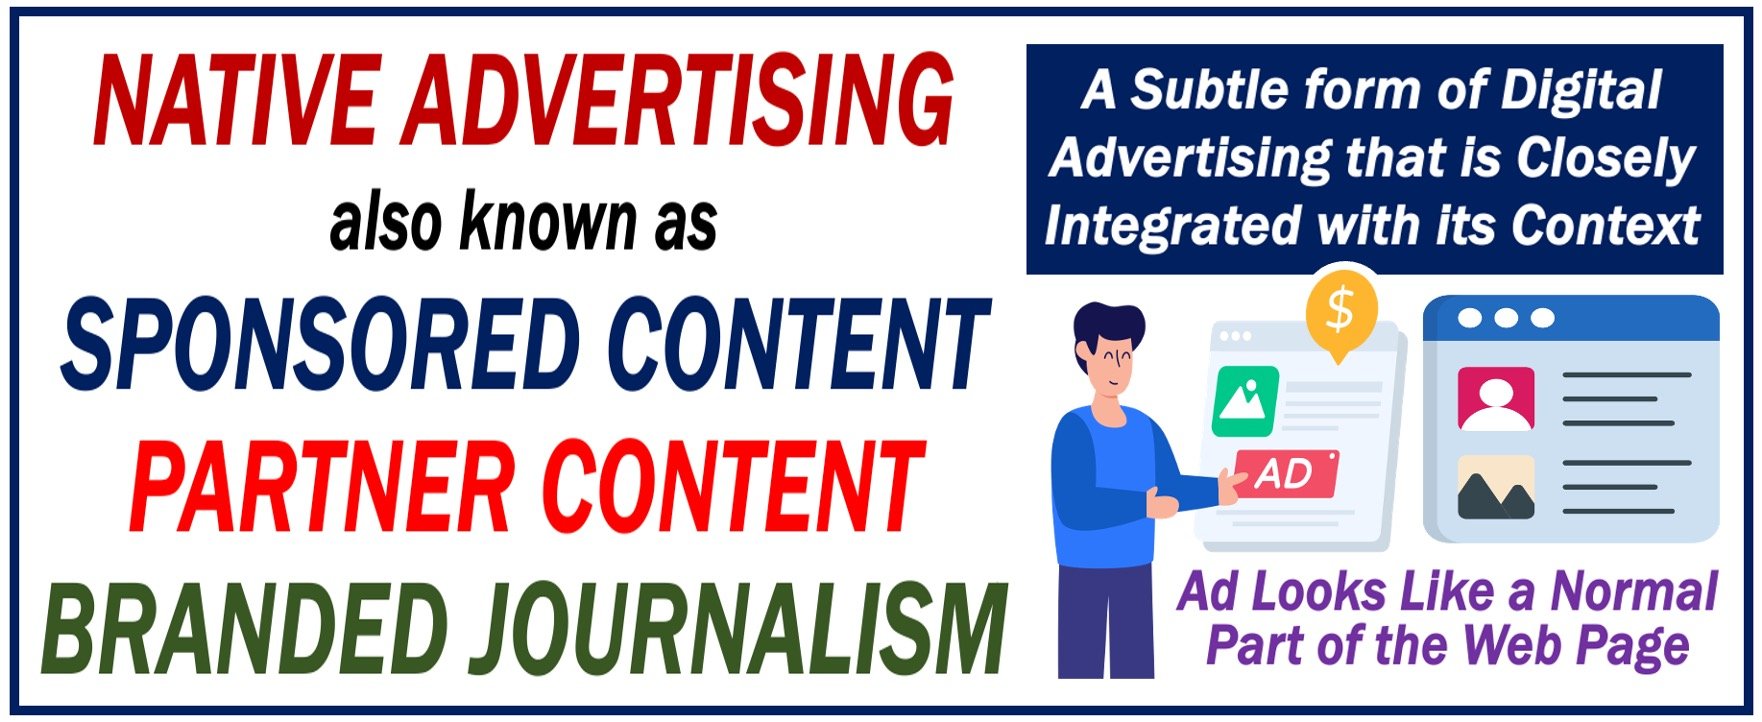 Image explaining native advertising plus some synonyms